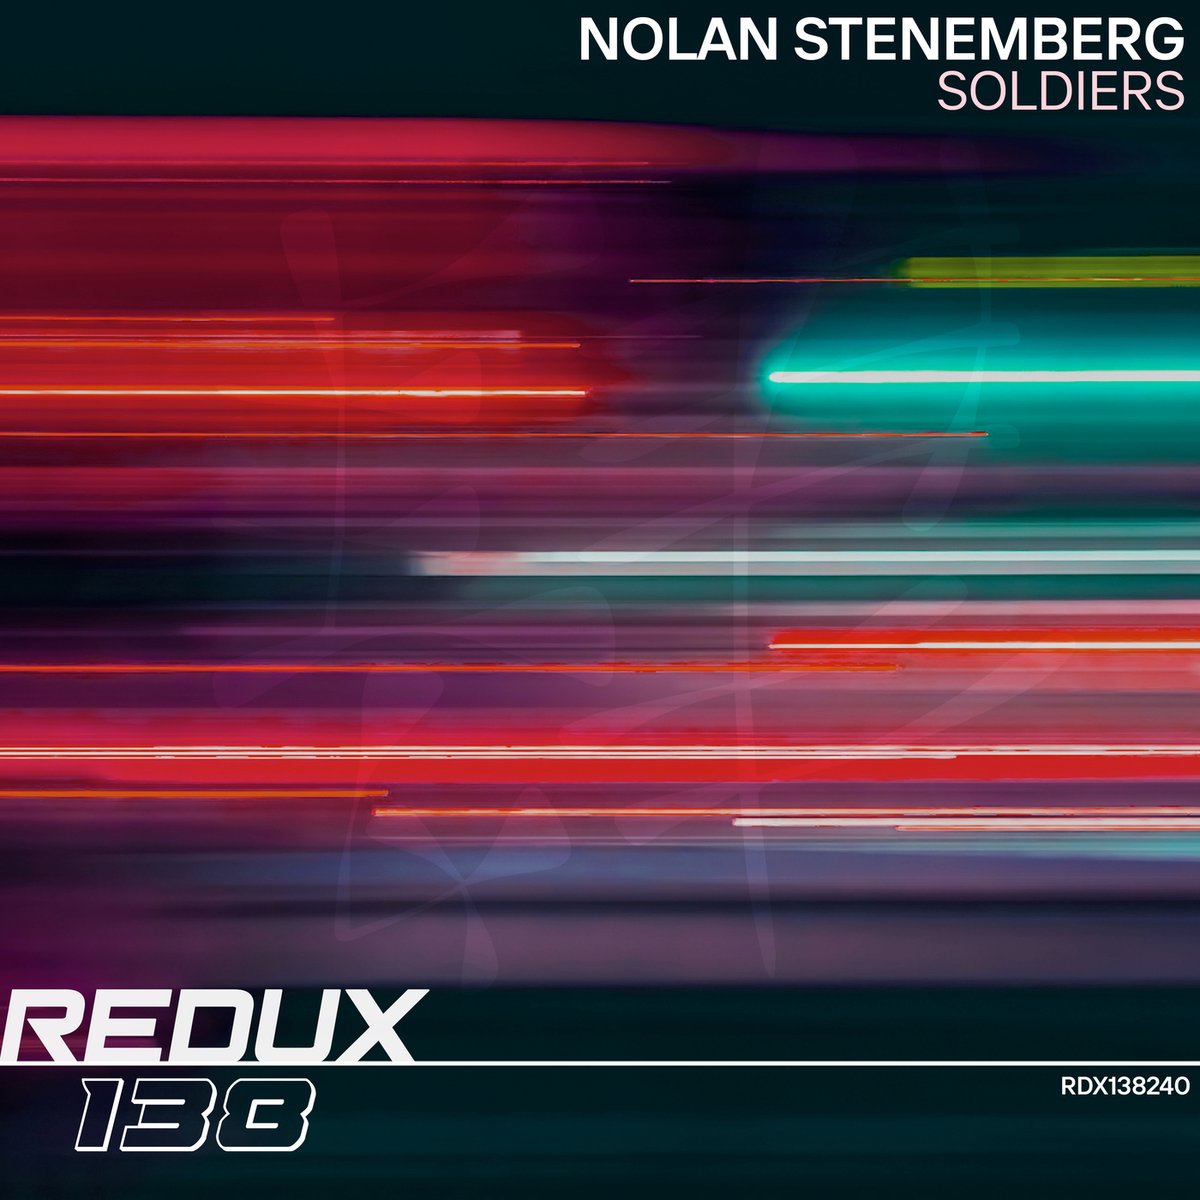 09 Nolan Stenemberg - Soldiers (Extended Mix) ▶️ davechimny.com/gv-577 #Listen #GanoriumVoyage 577 #Trance #DJ #Podcast #RadioShow ✳️ @NolanStenemberg @ReduxRecordings